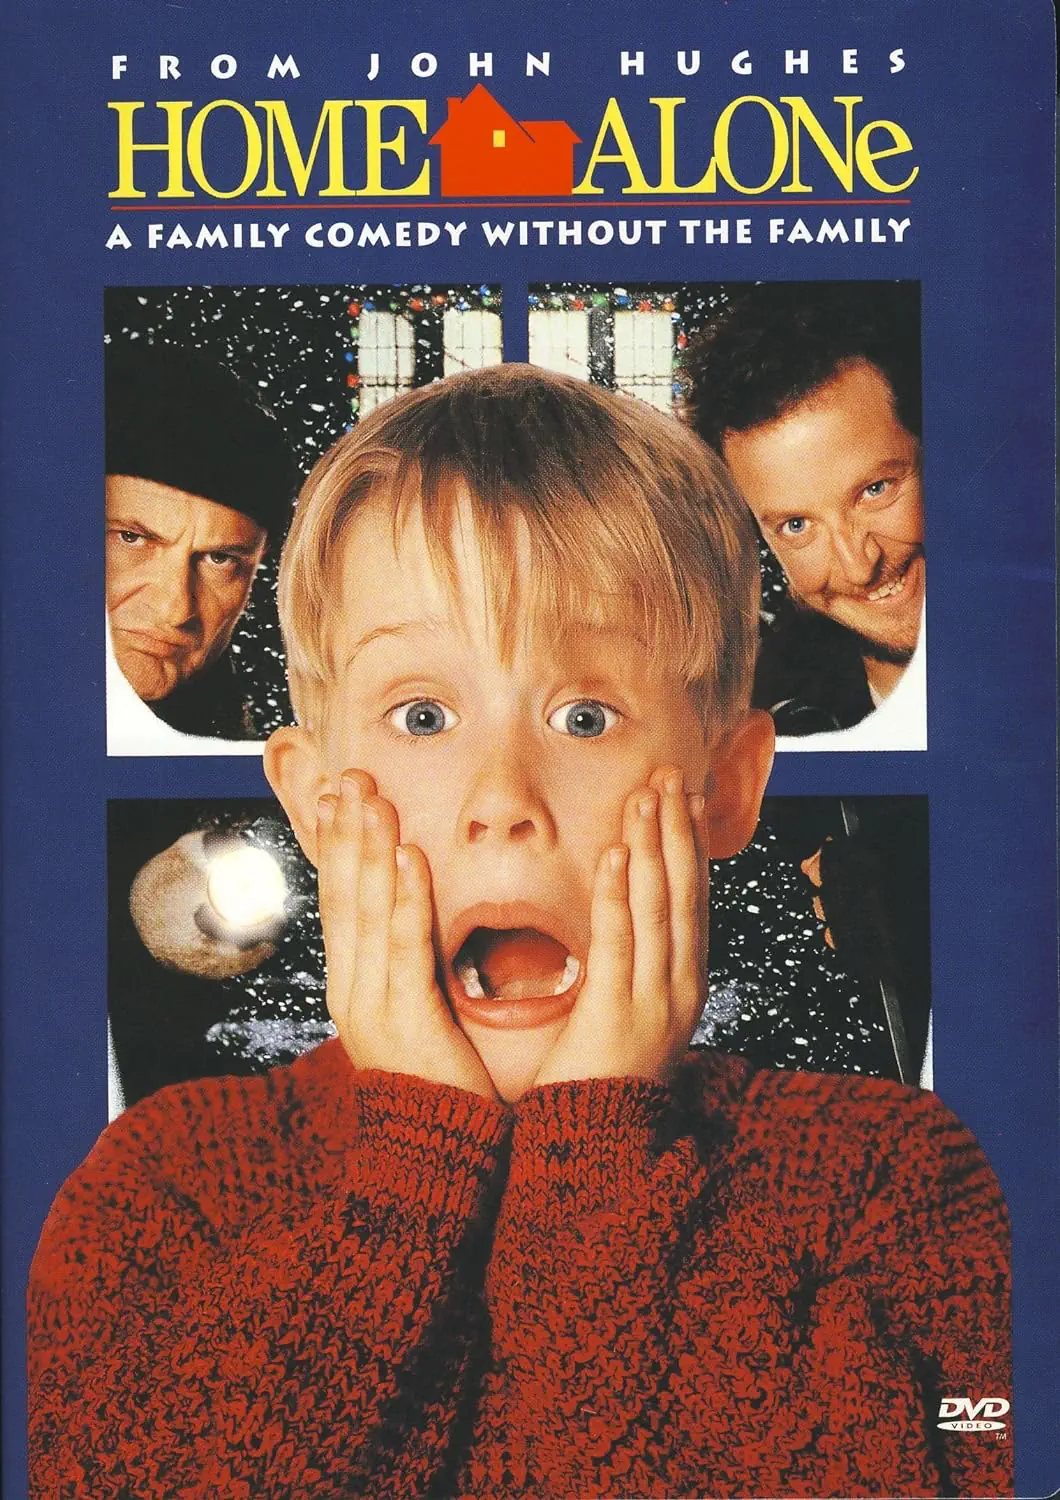 Home Alone movie poster (Source: IMDB)